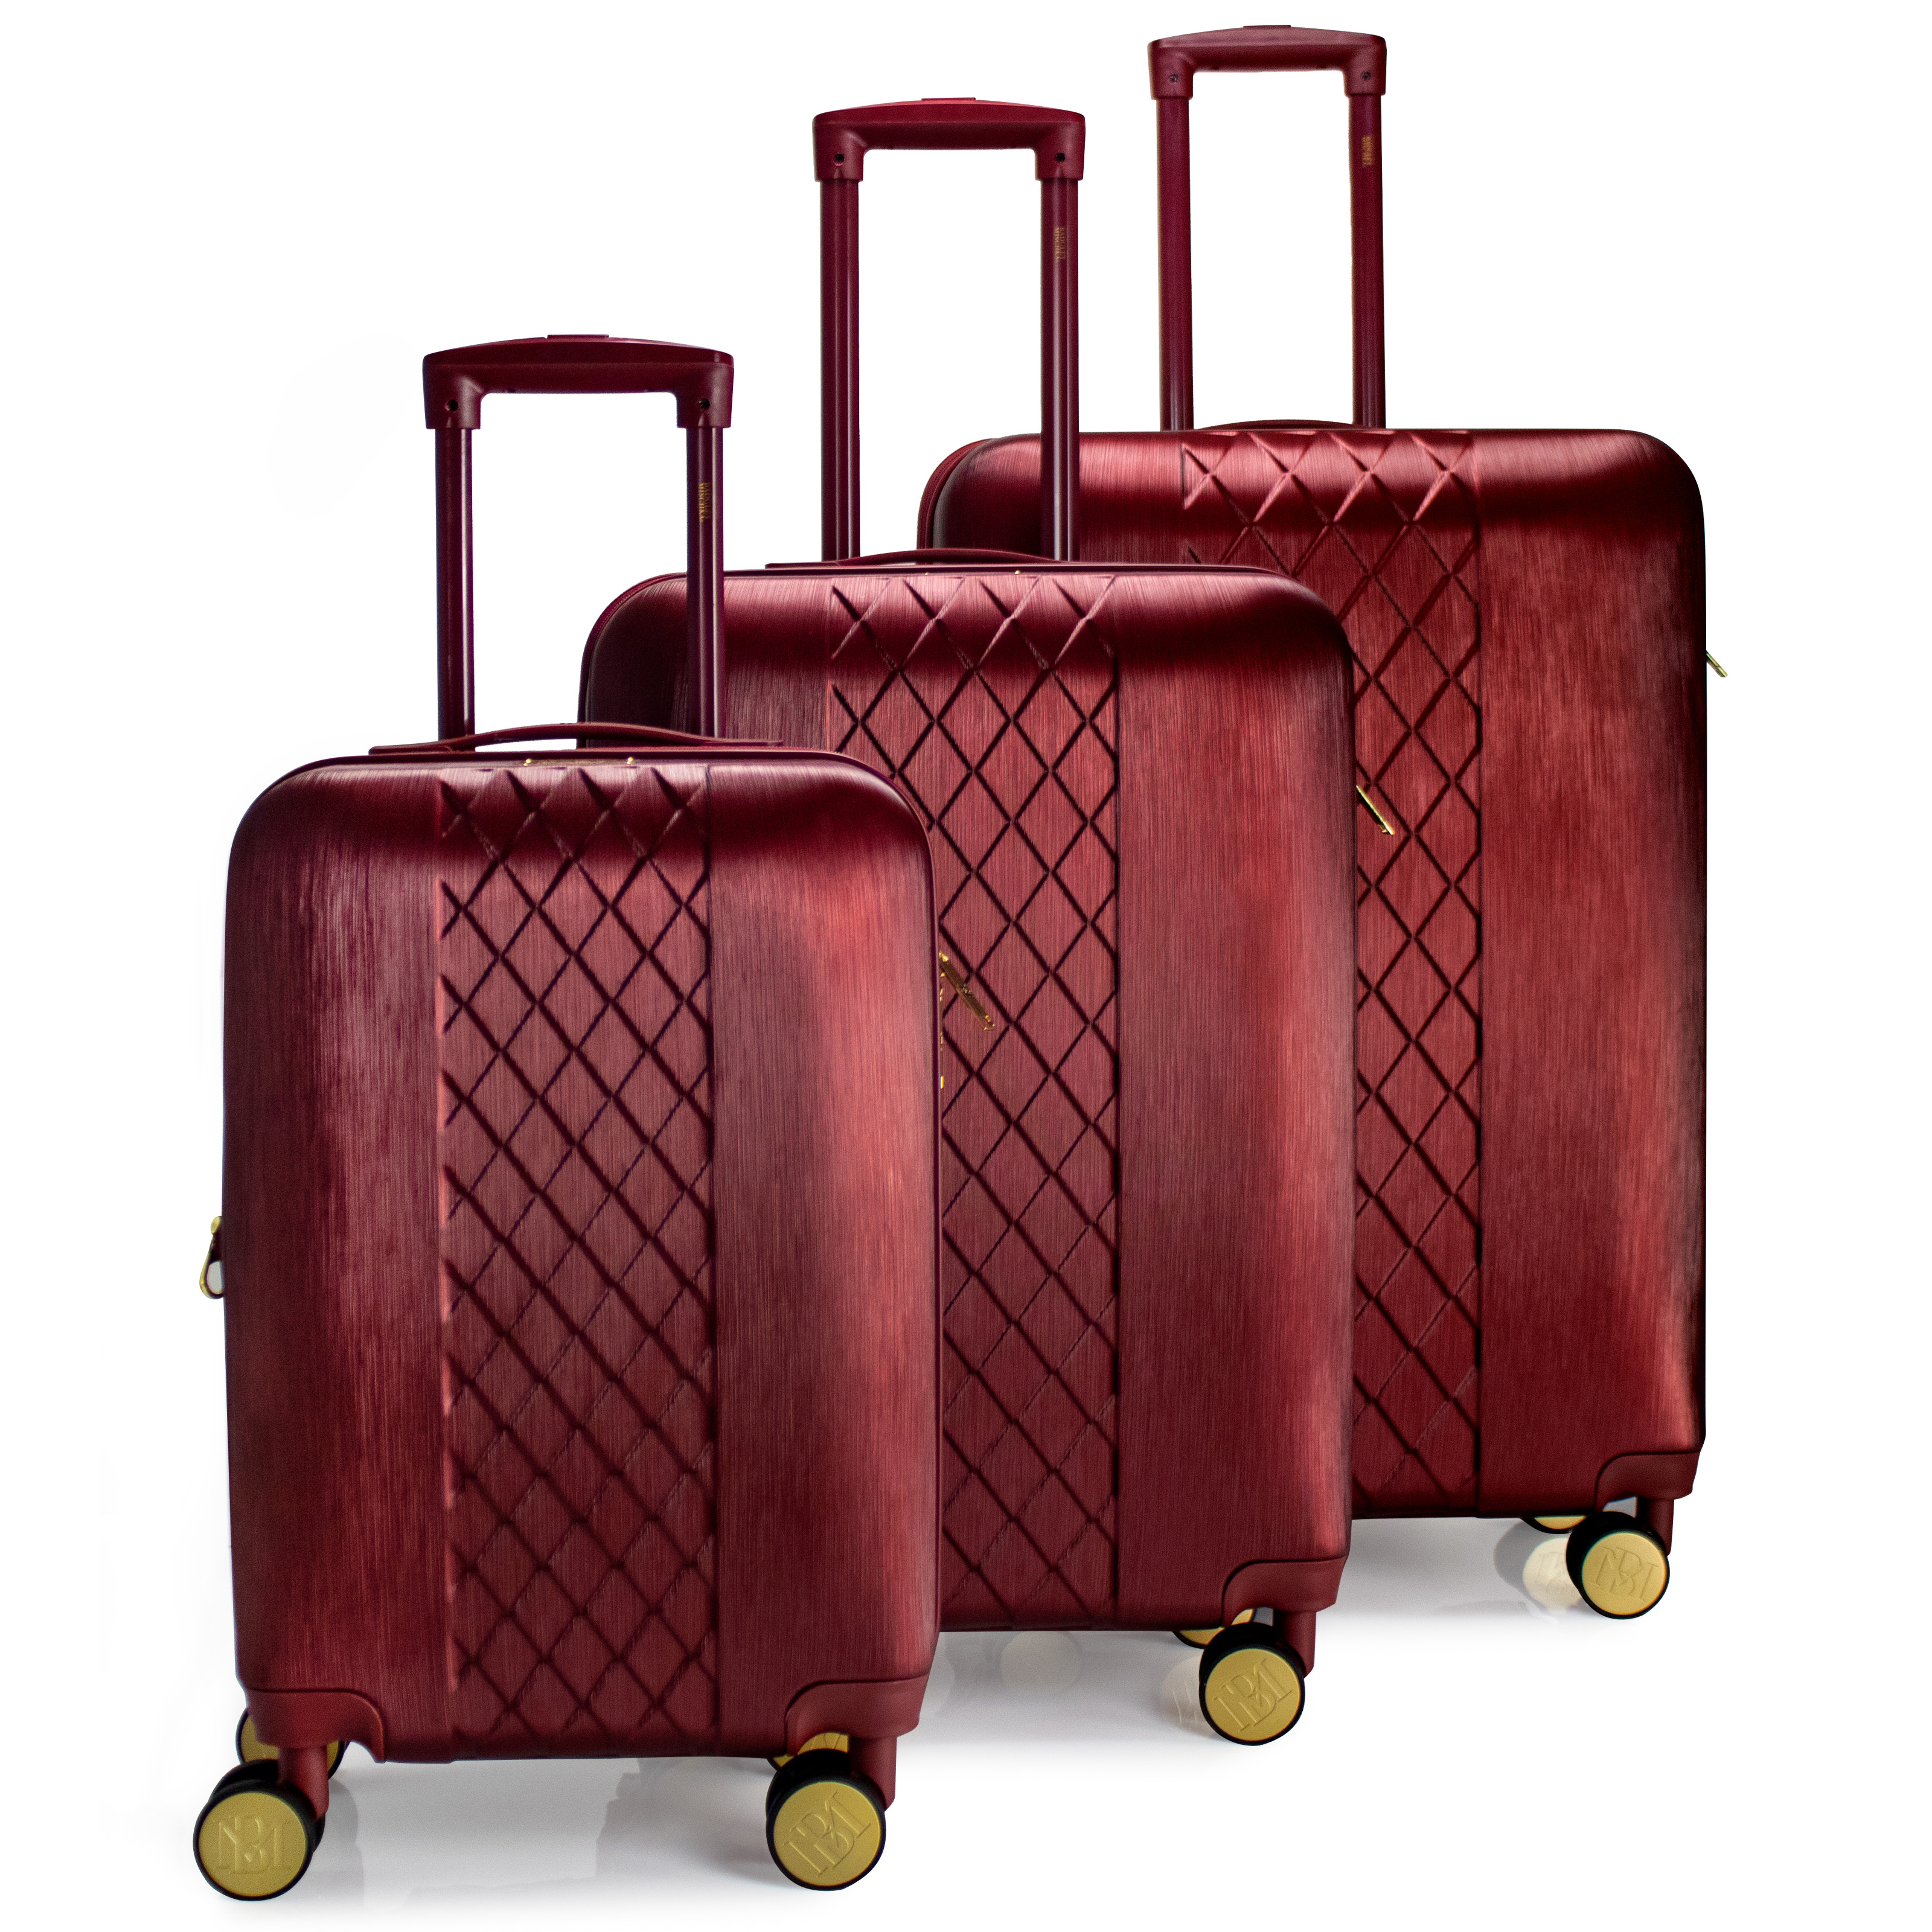 Luan Diamond 3-Piece Luggage Set is 37% off